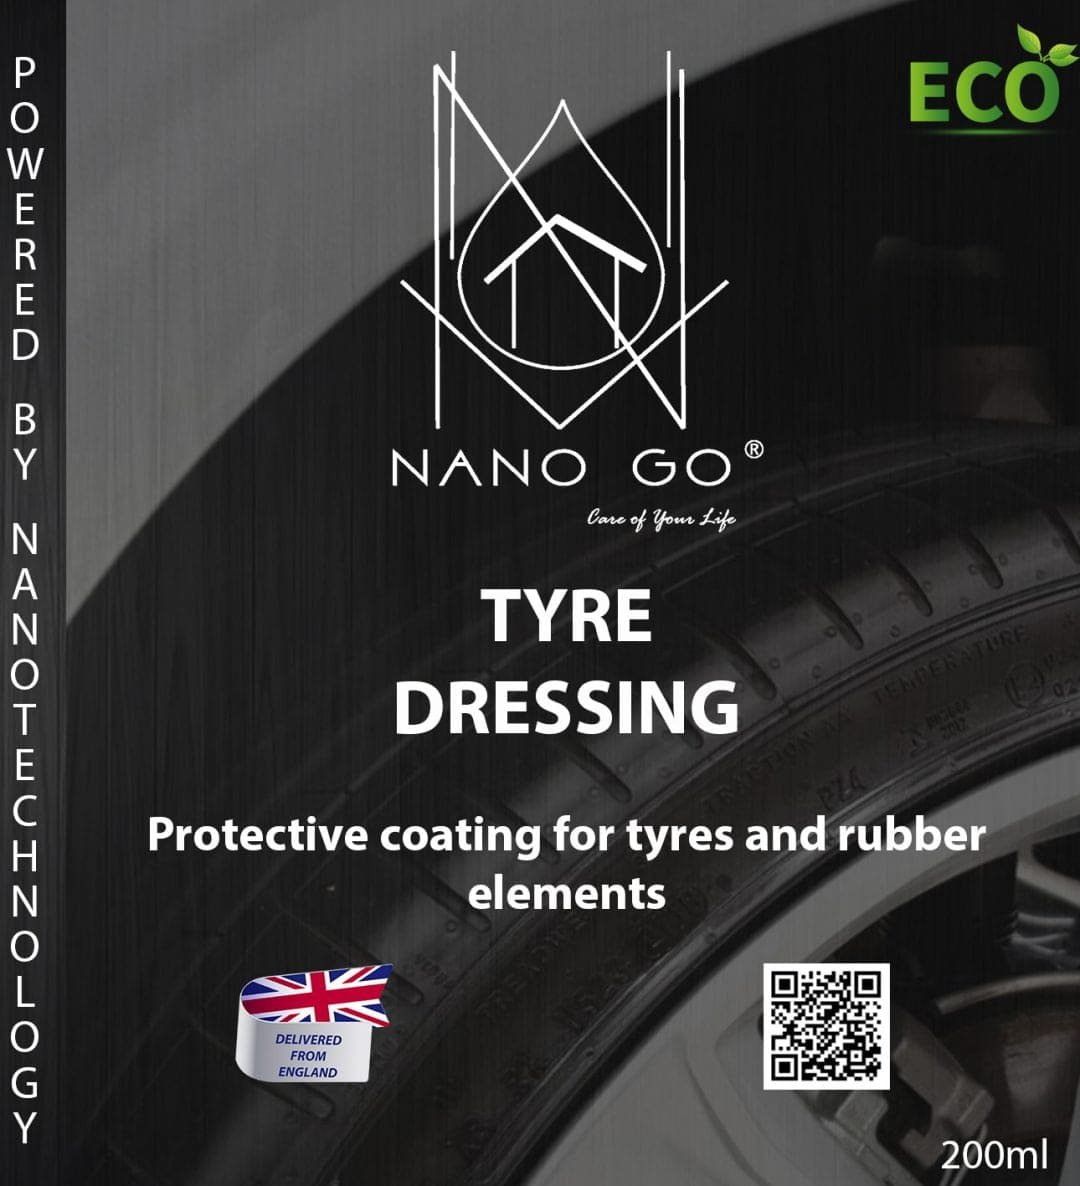 Tyre dressing